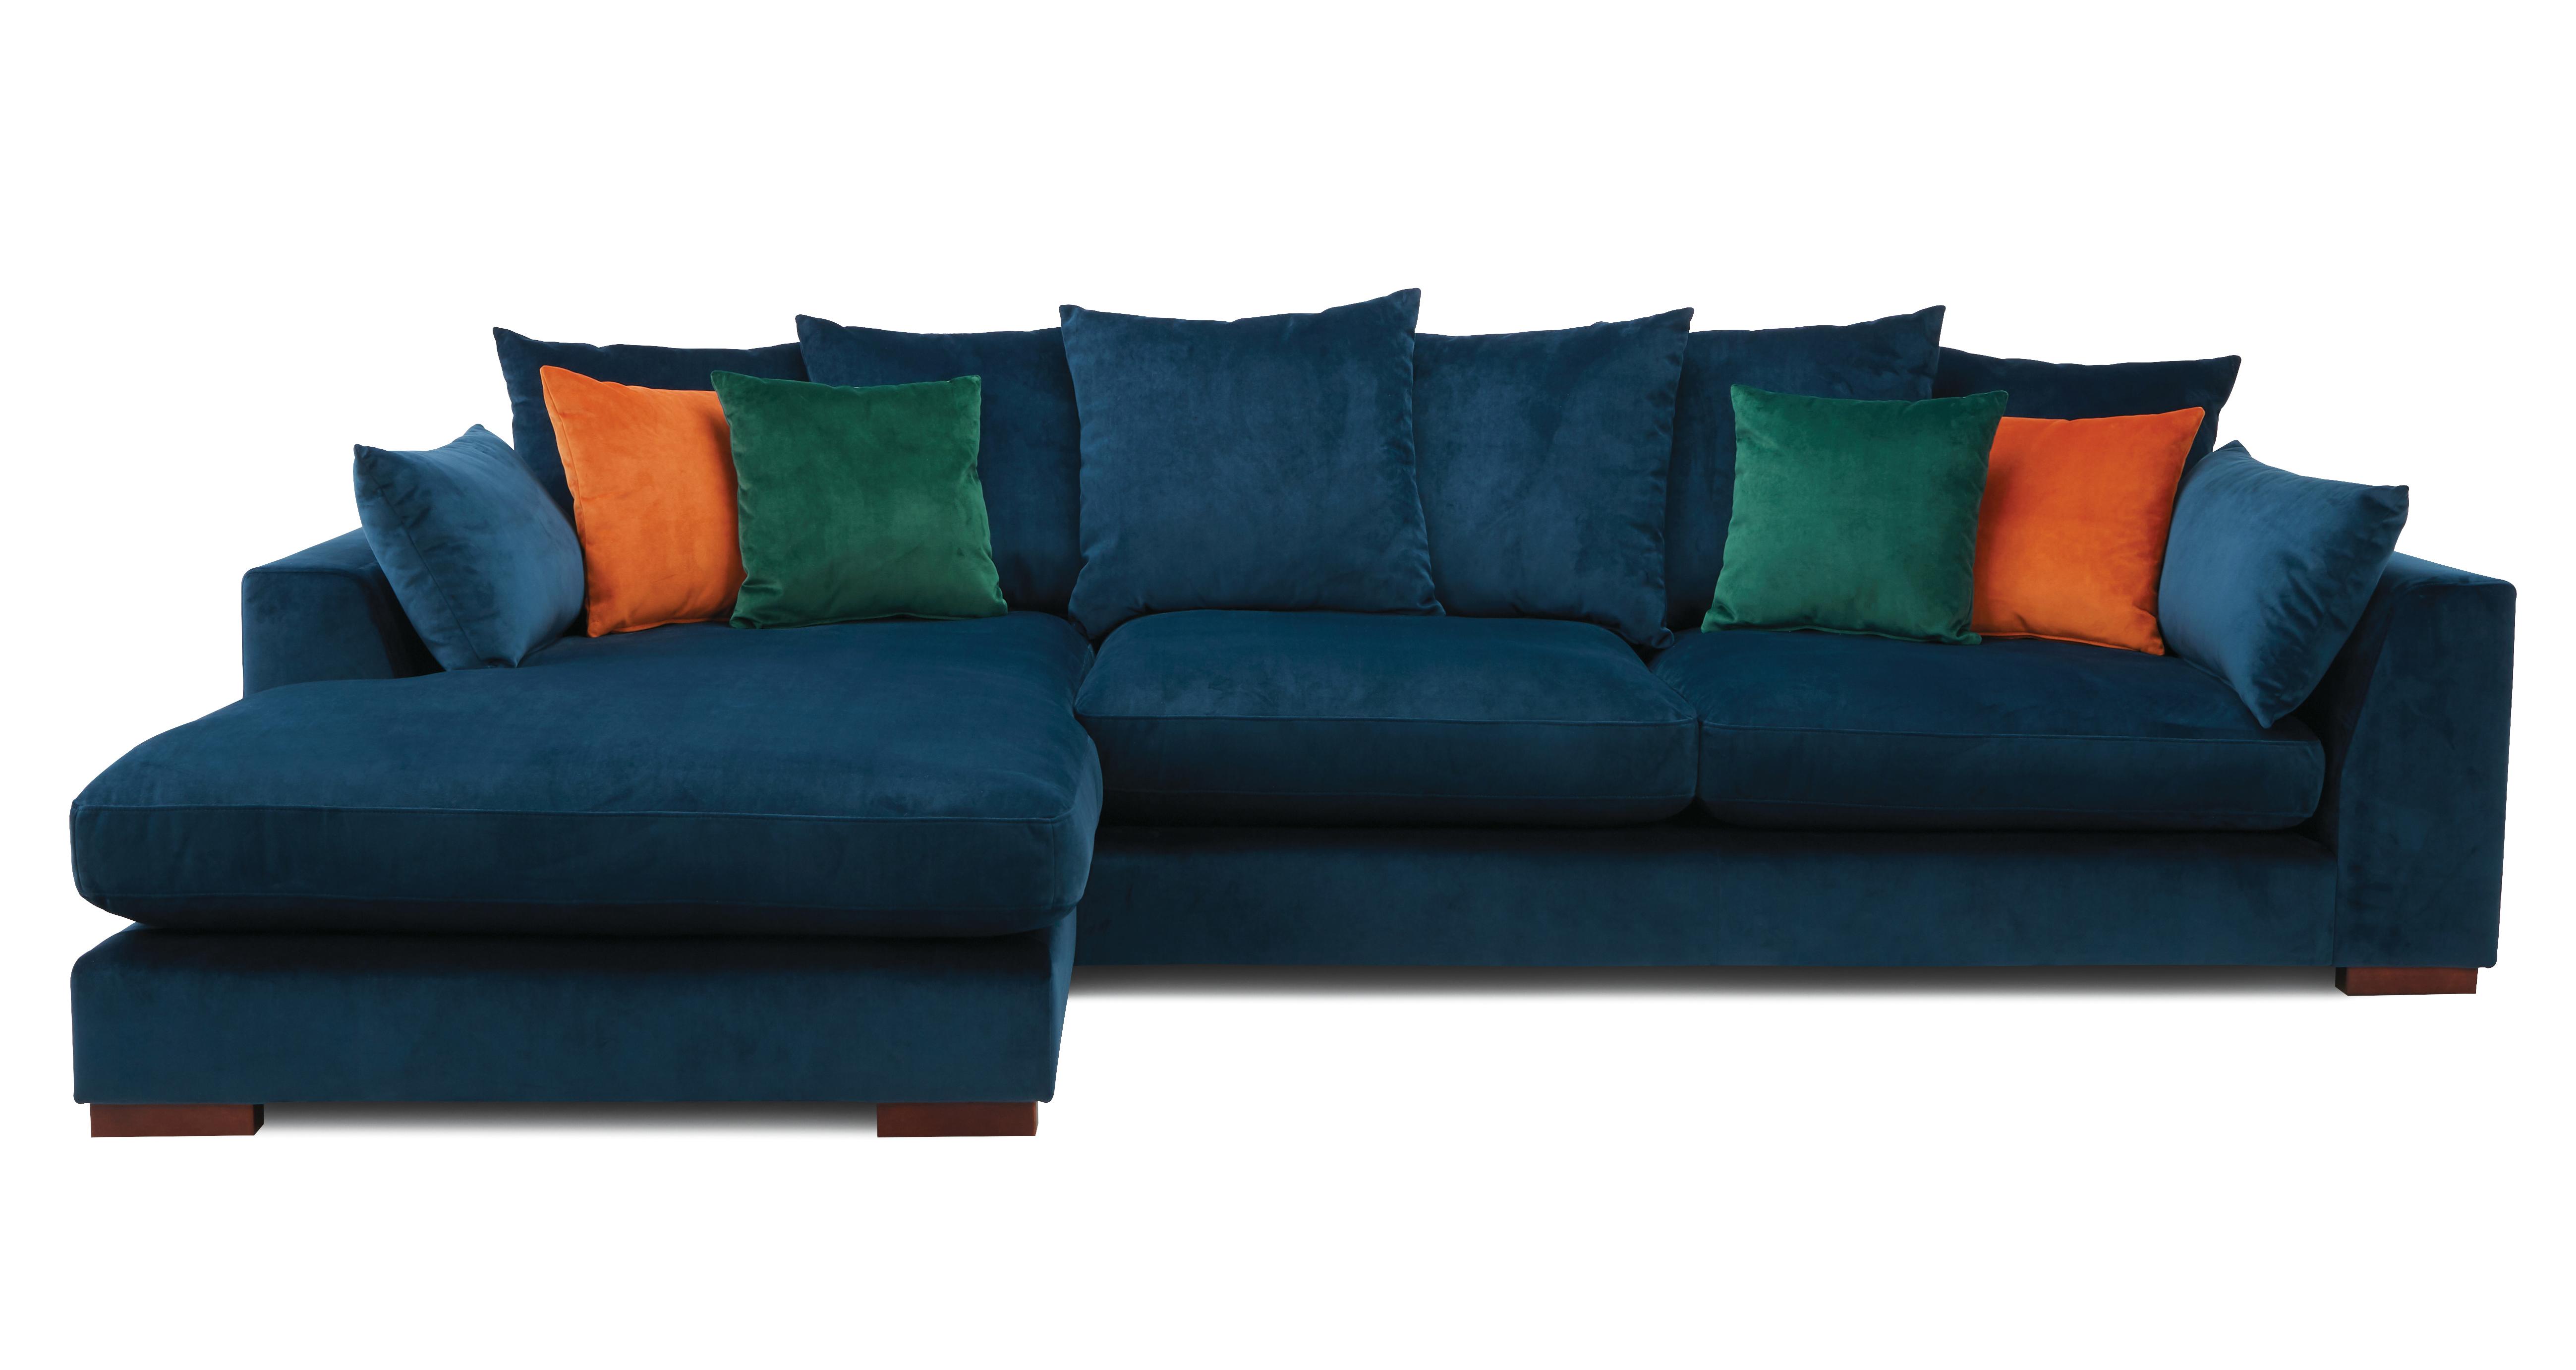 plush sofa bed review